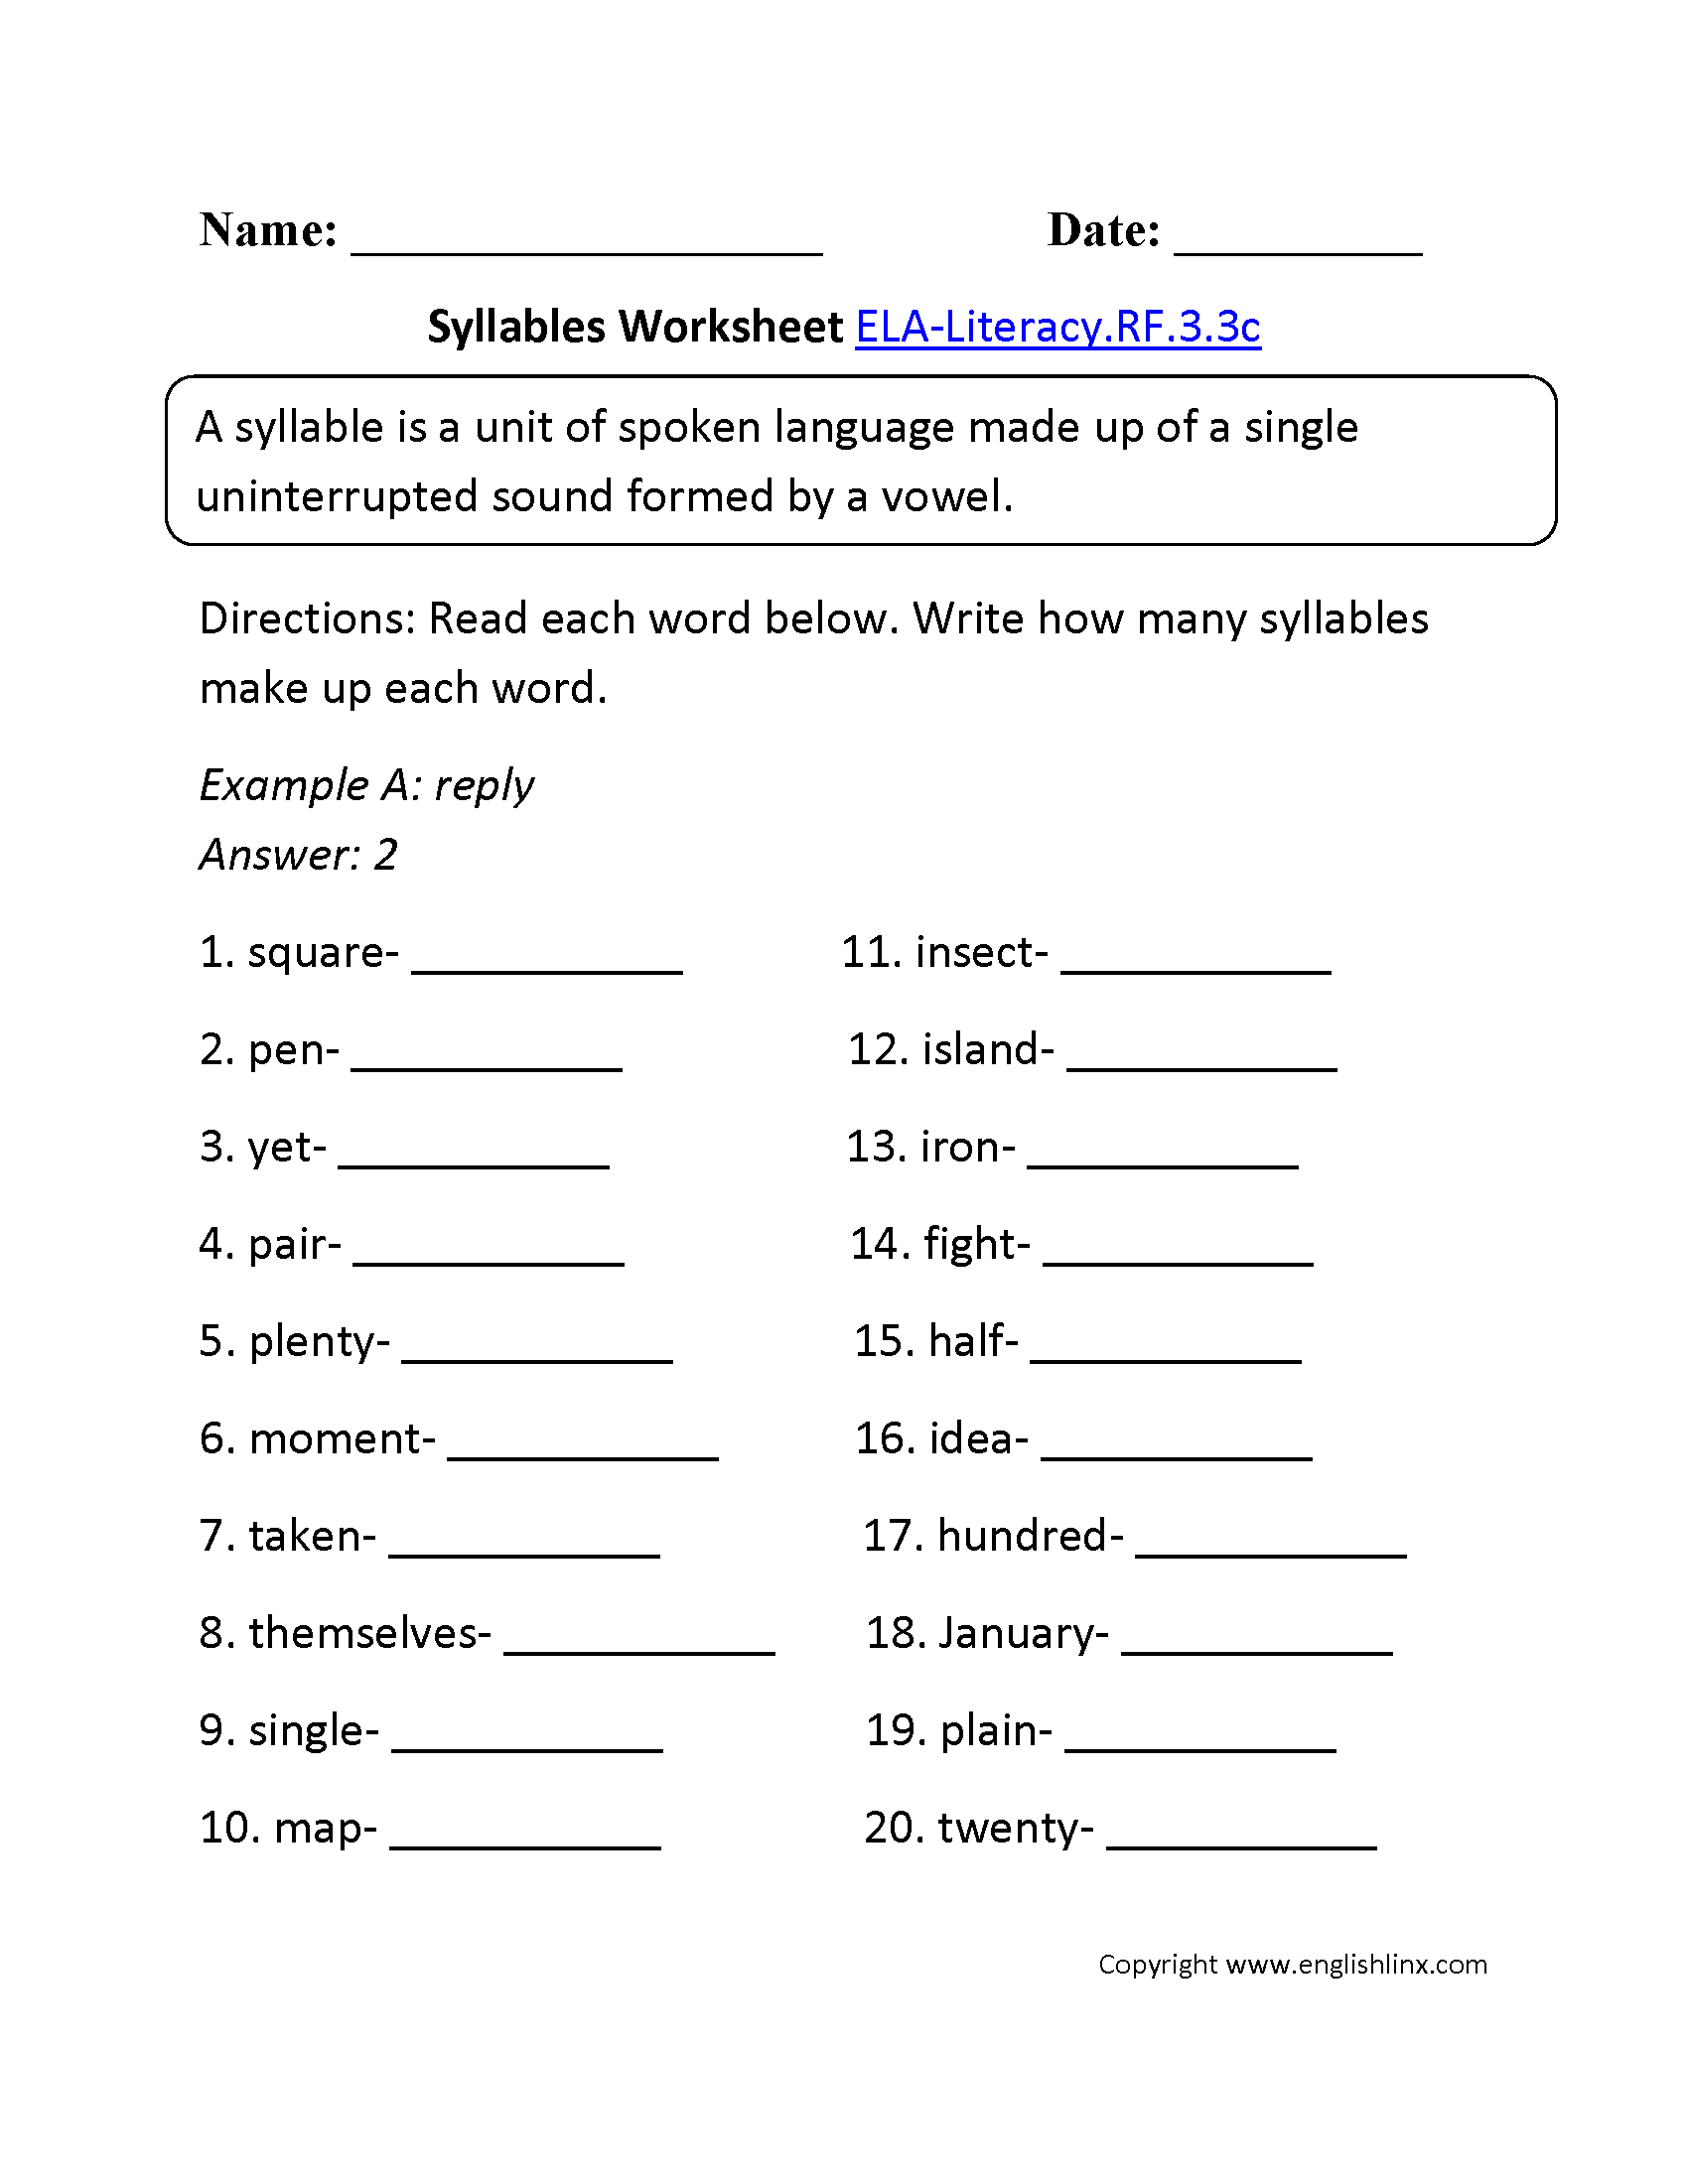 Syllables Worksheet 1 Ela-Literacy.rf.3.3C Reading Foundational | 3Rd Grade Language Arts Worksheets Printables